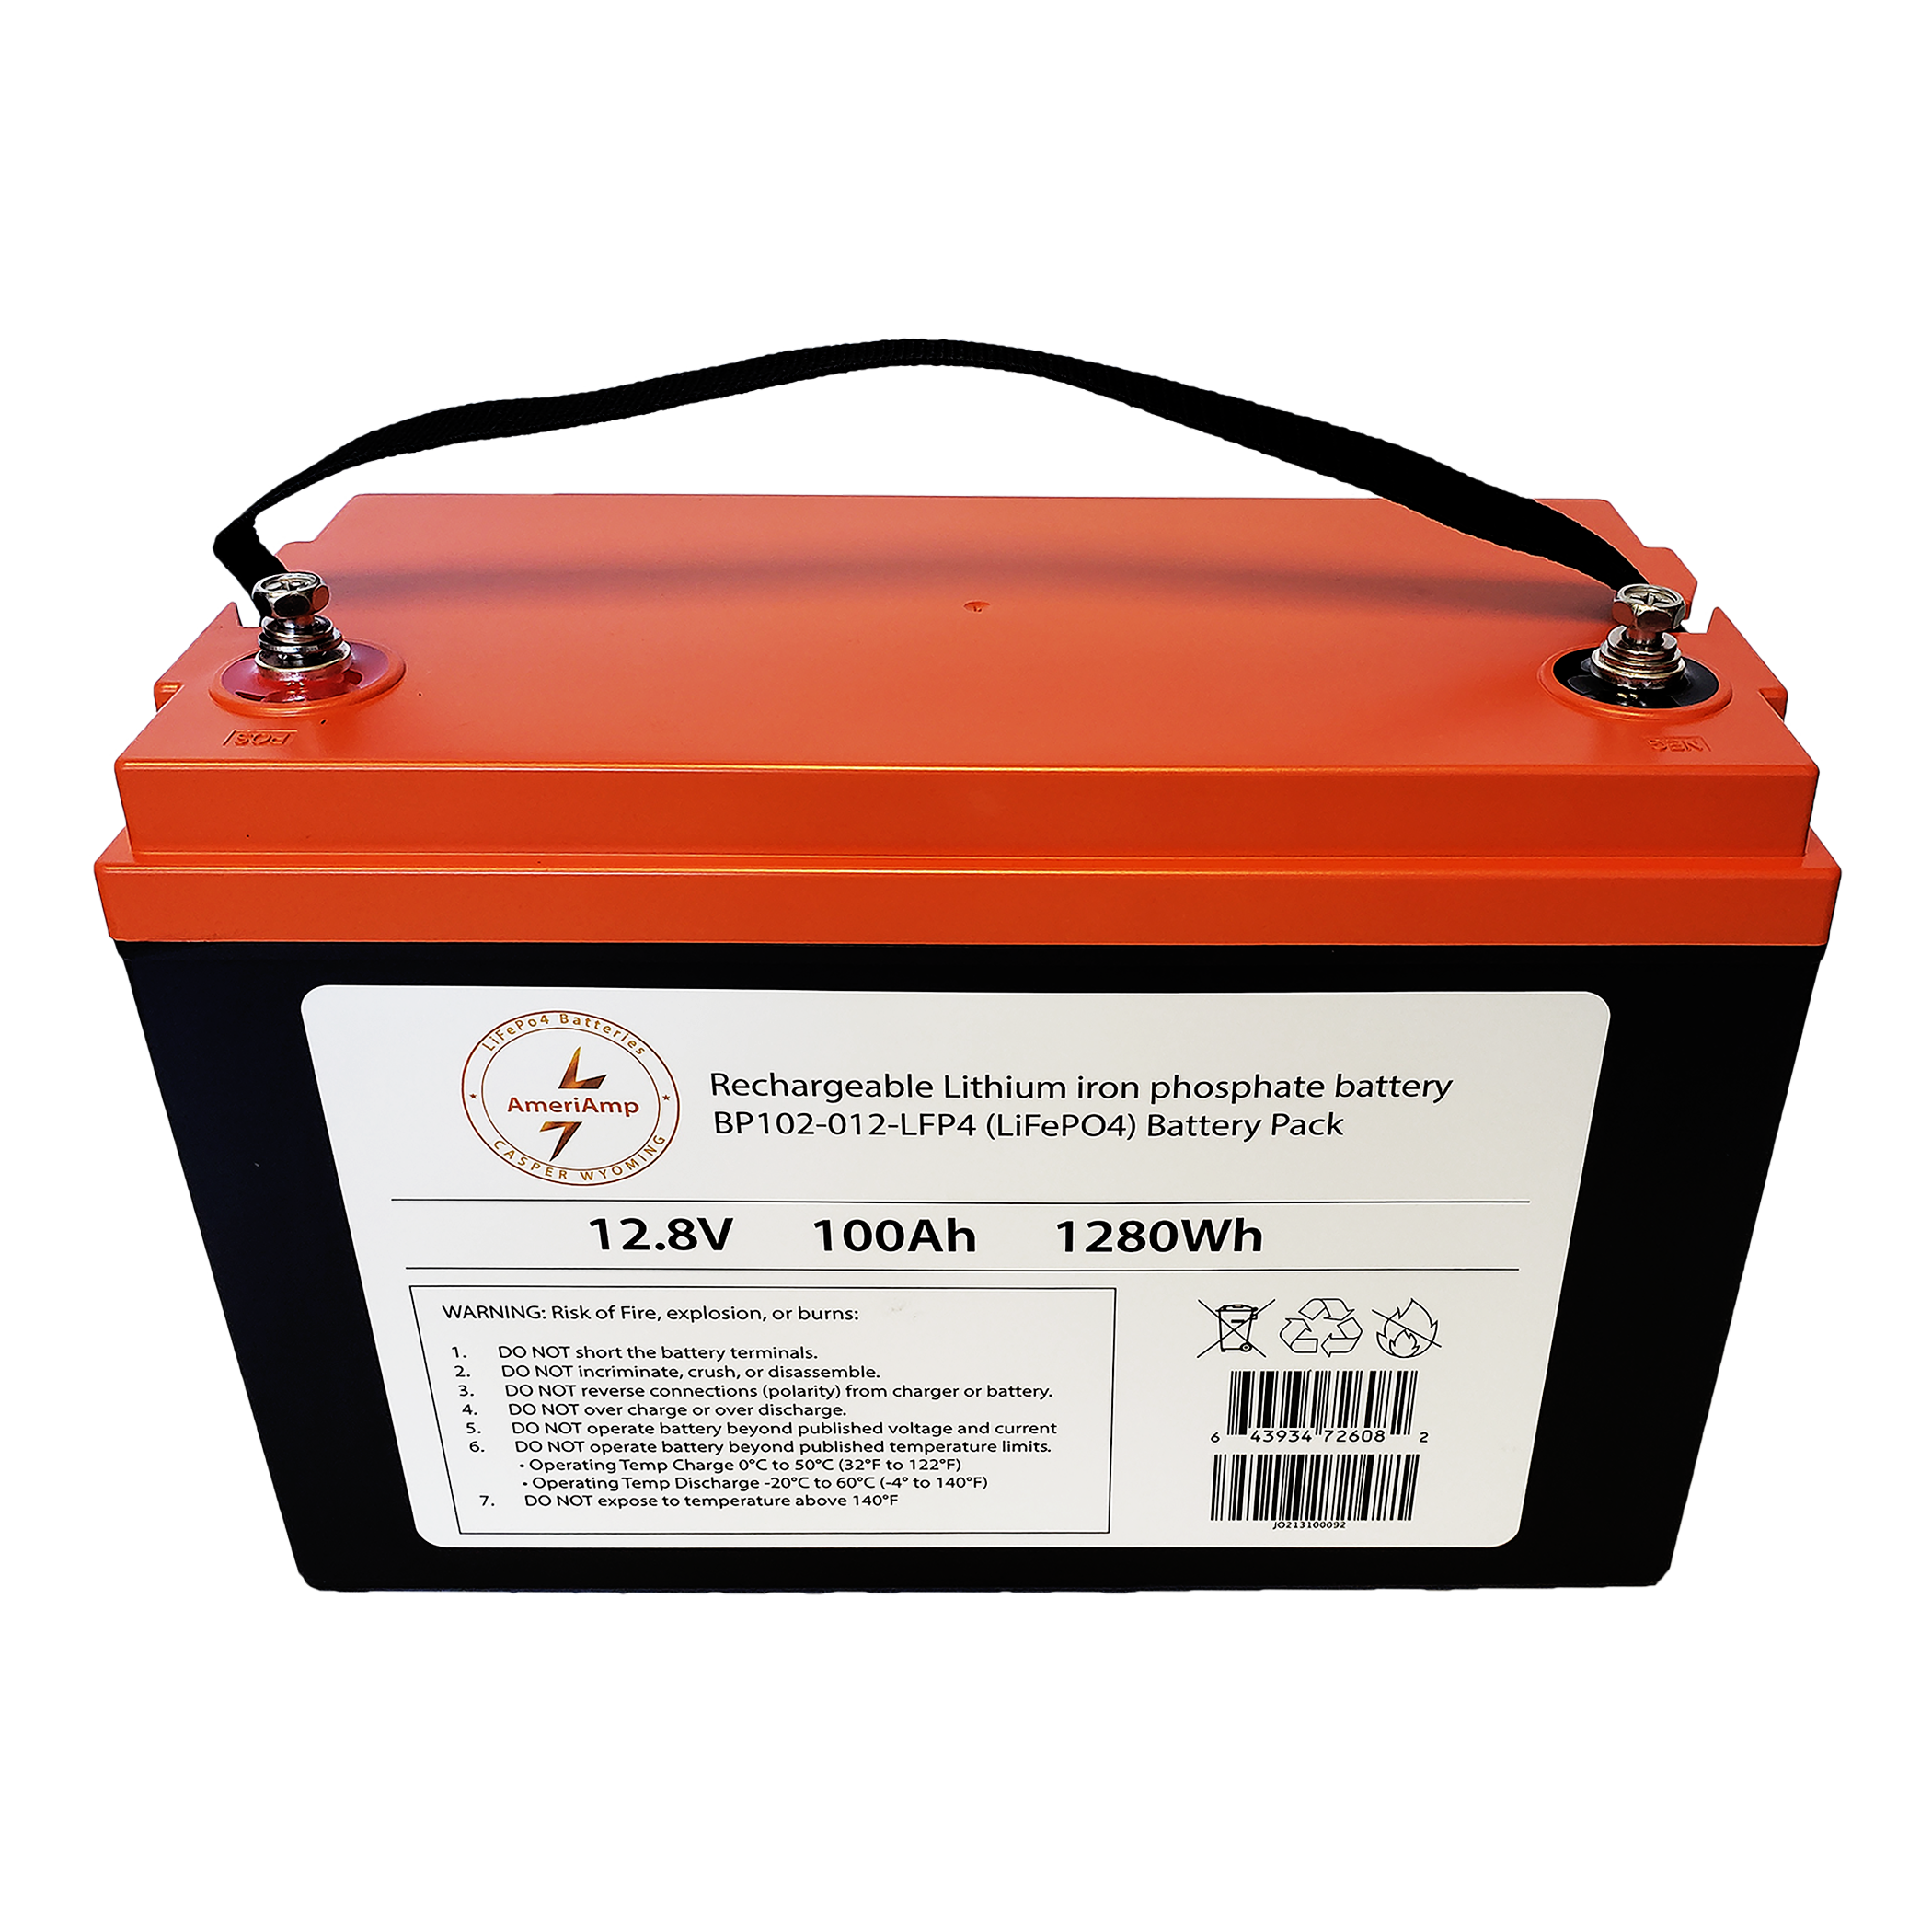 LiFePo4 12.8V 100AH Lithium Iron Phosphate Long Lasting Core Battery ( –  Ameriamp